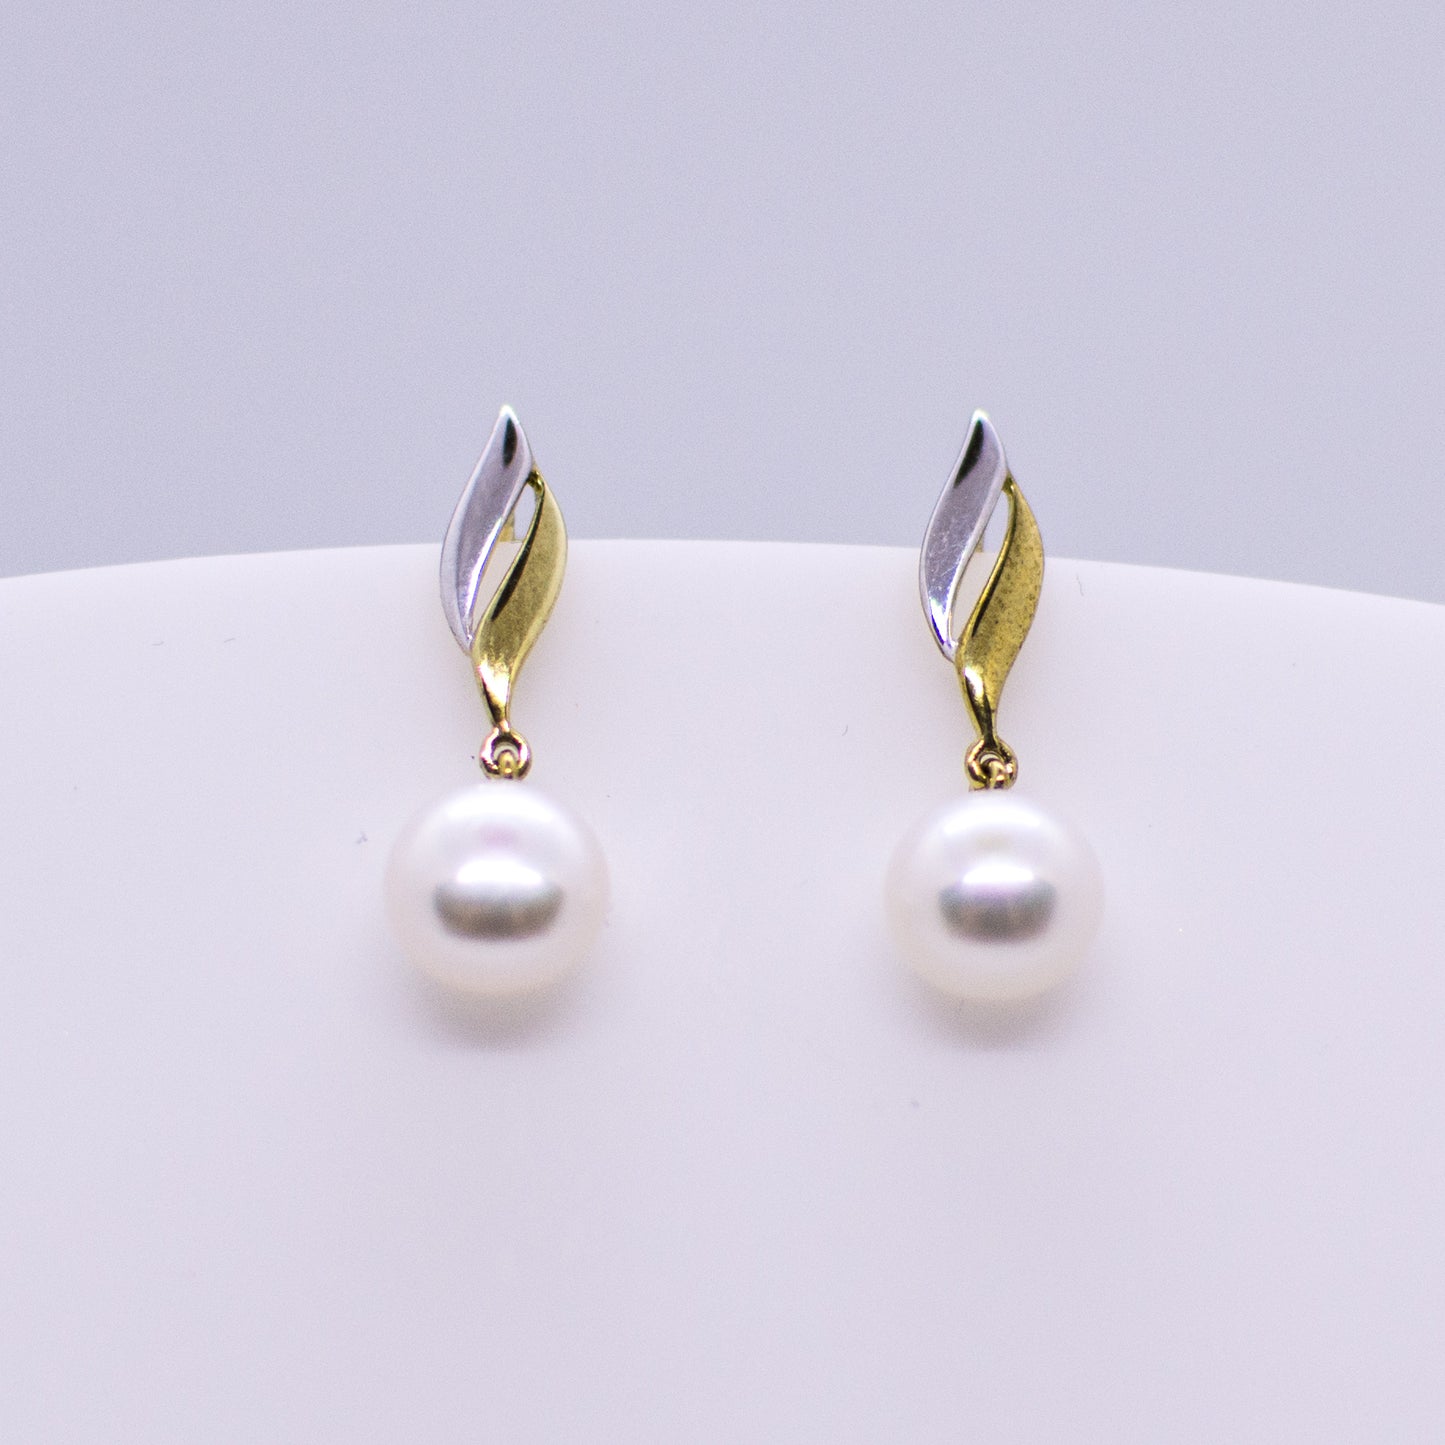 9ct Gold Freshwater Pearl Drop Earrings - John Ross Jewellers